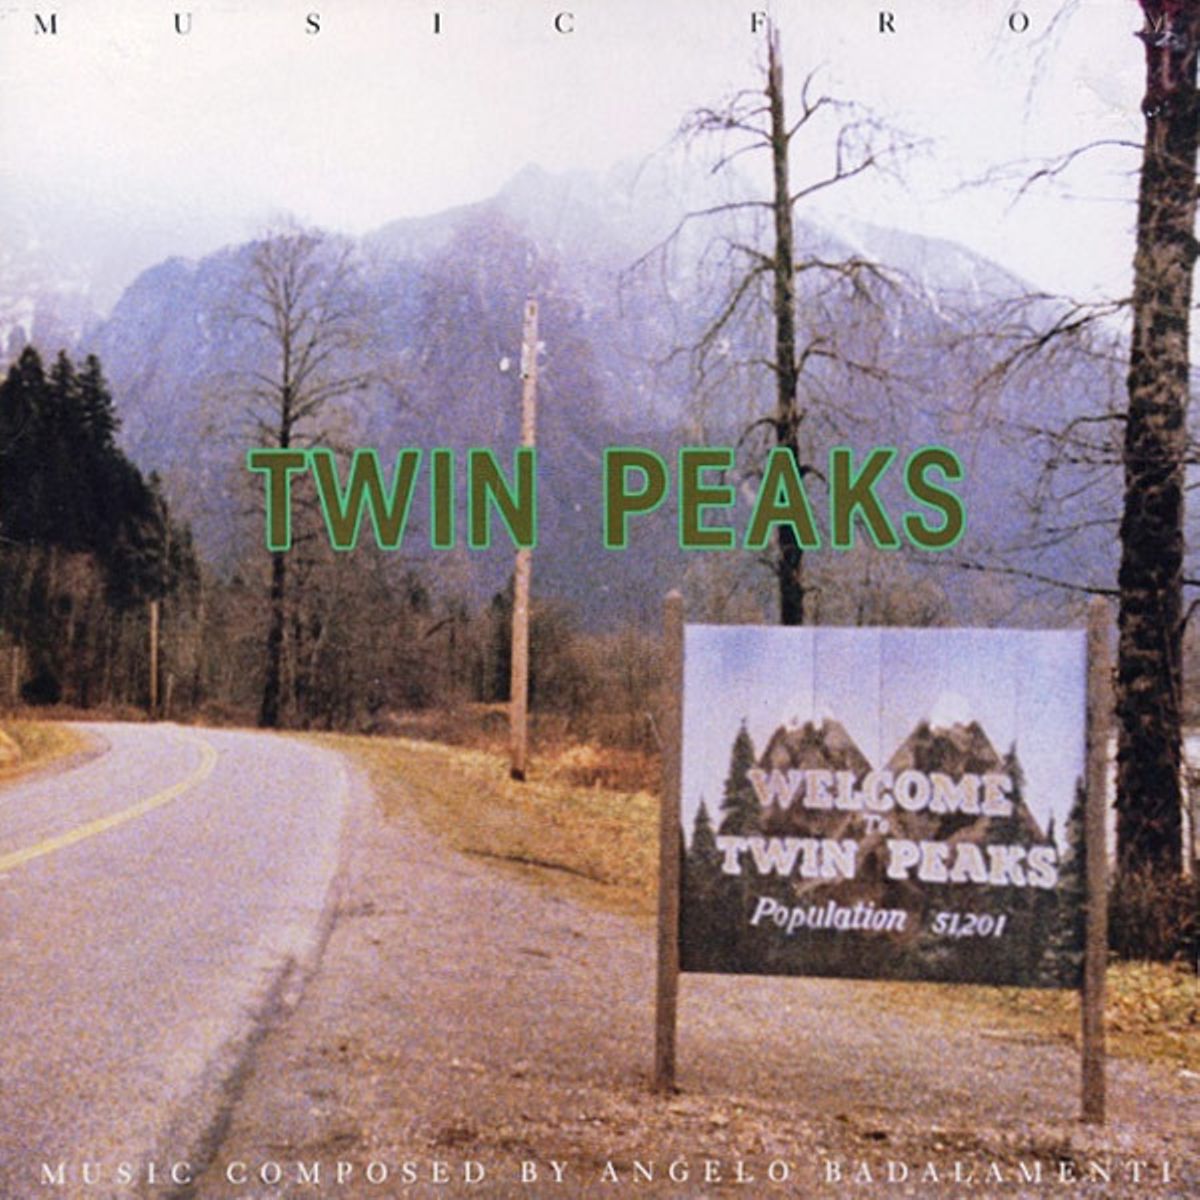 ANGELO BADALAMENTI "Twin Peaks Soundtrack" LP